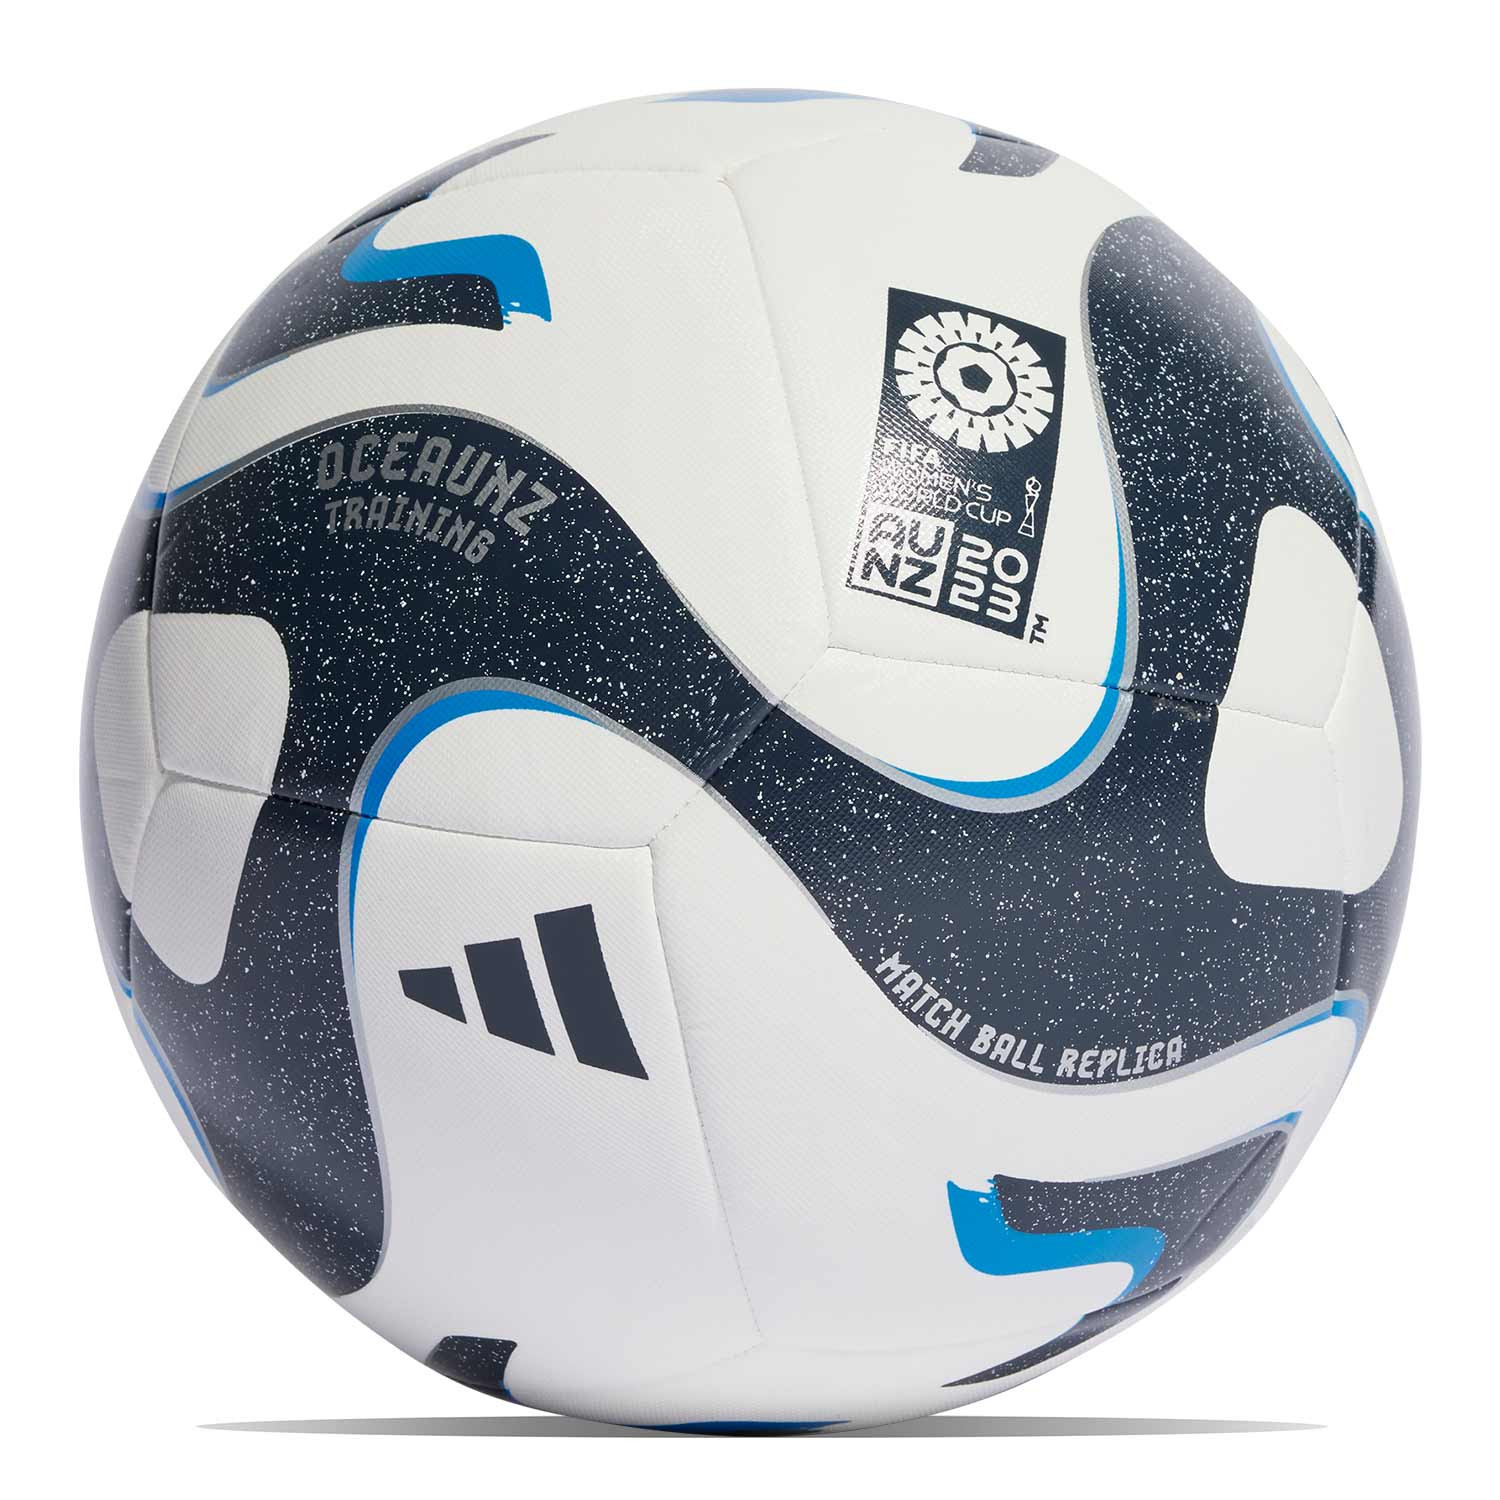 Balón de Fútbol Sala Munich Norok Indoor 89